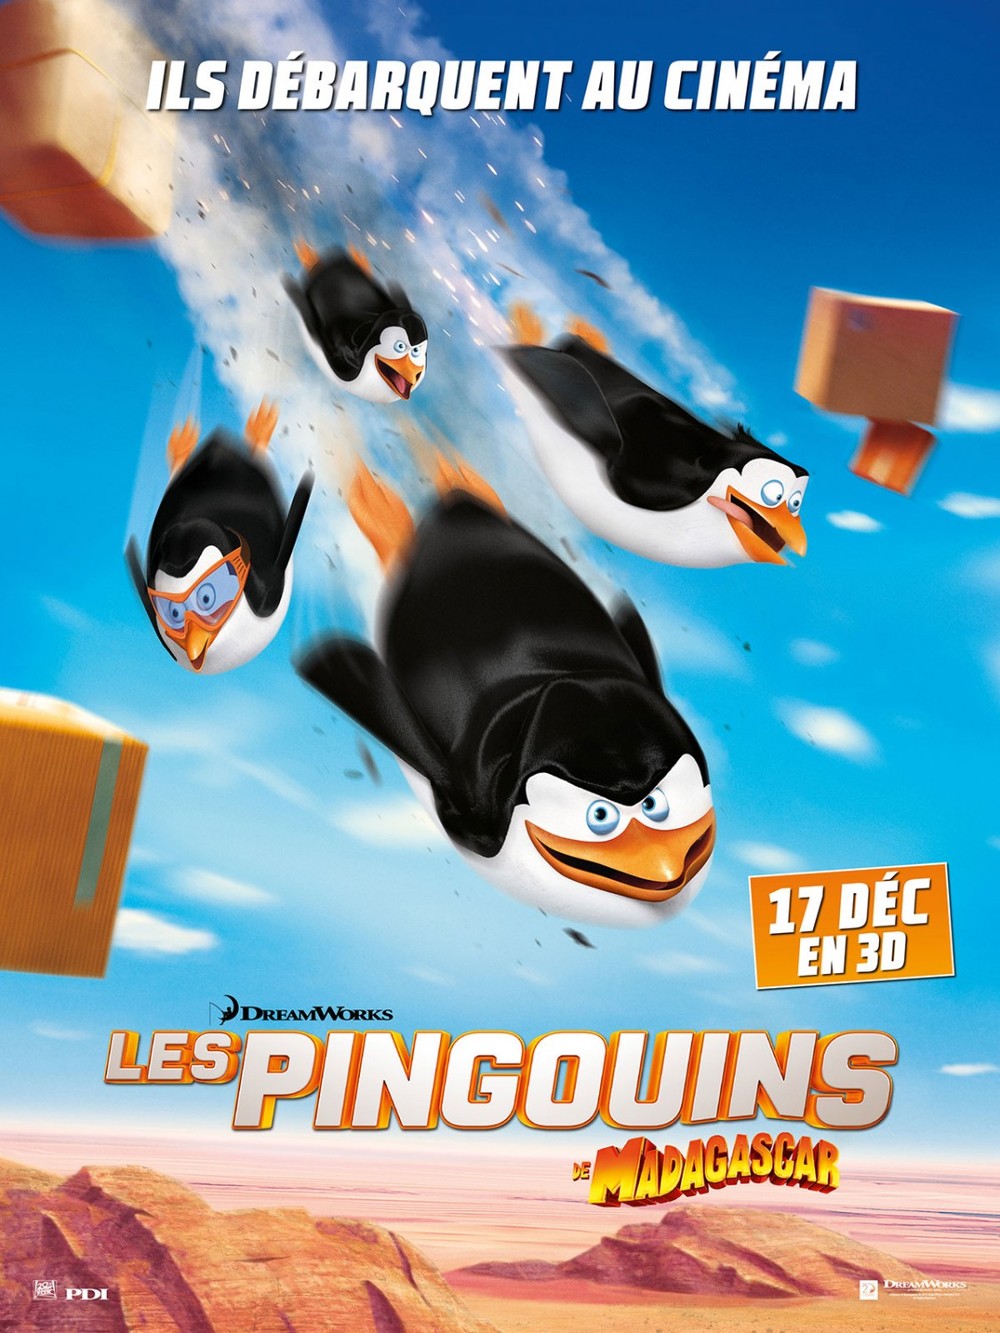 Penguins of Madagascar DVD Release Date | Redbox, Netflix, iTunes, Amazon